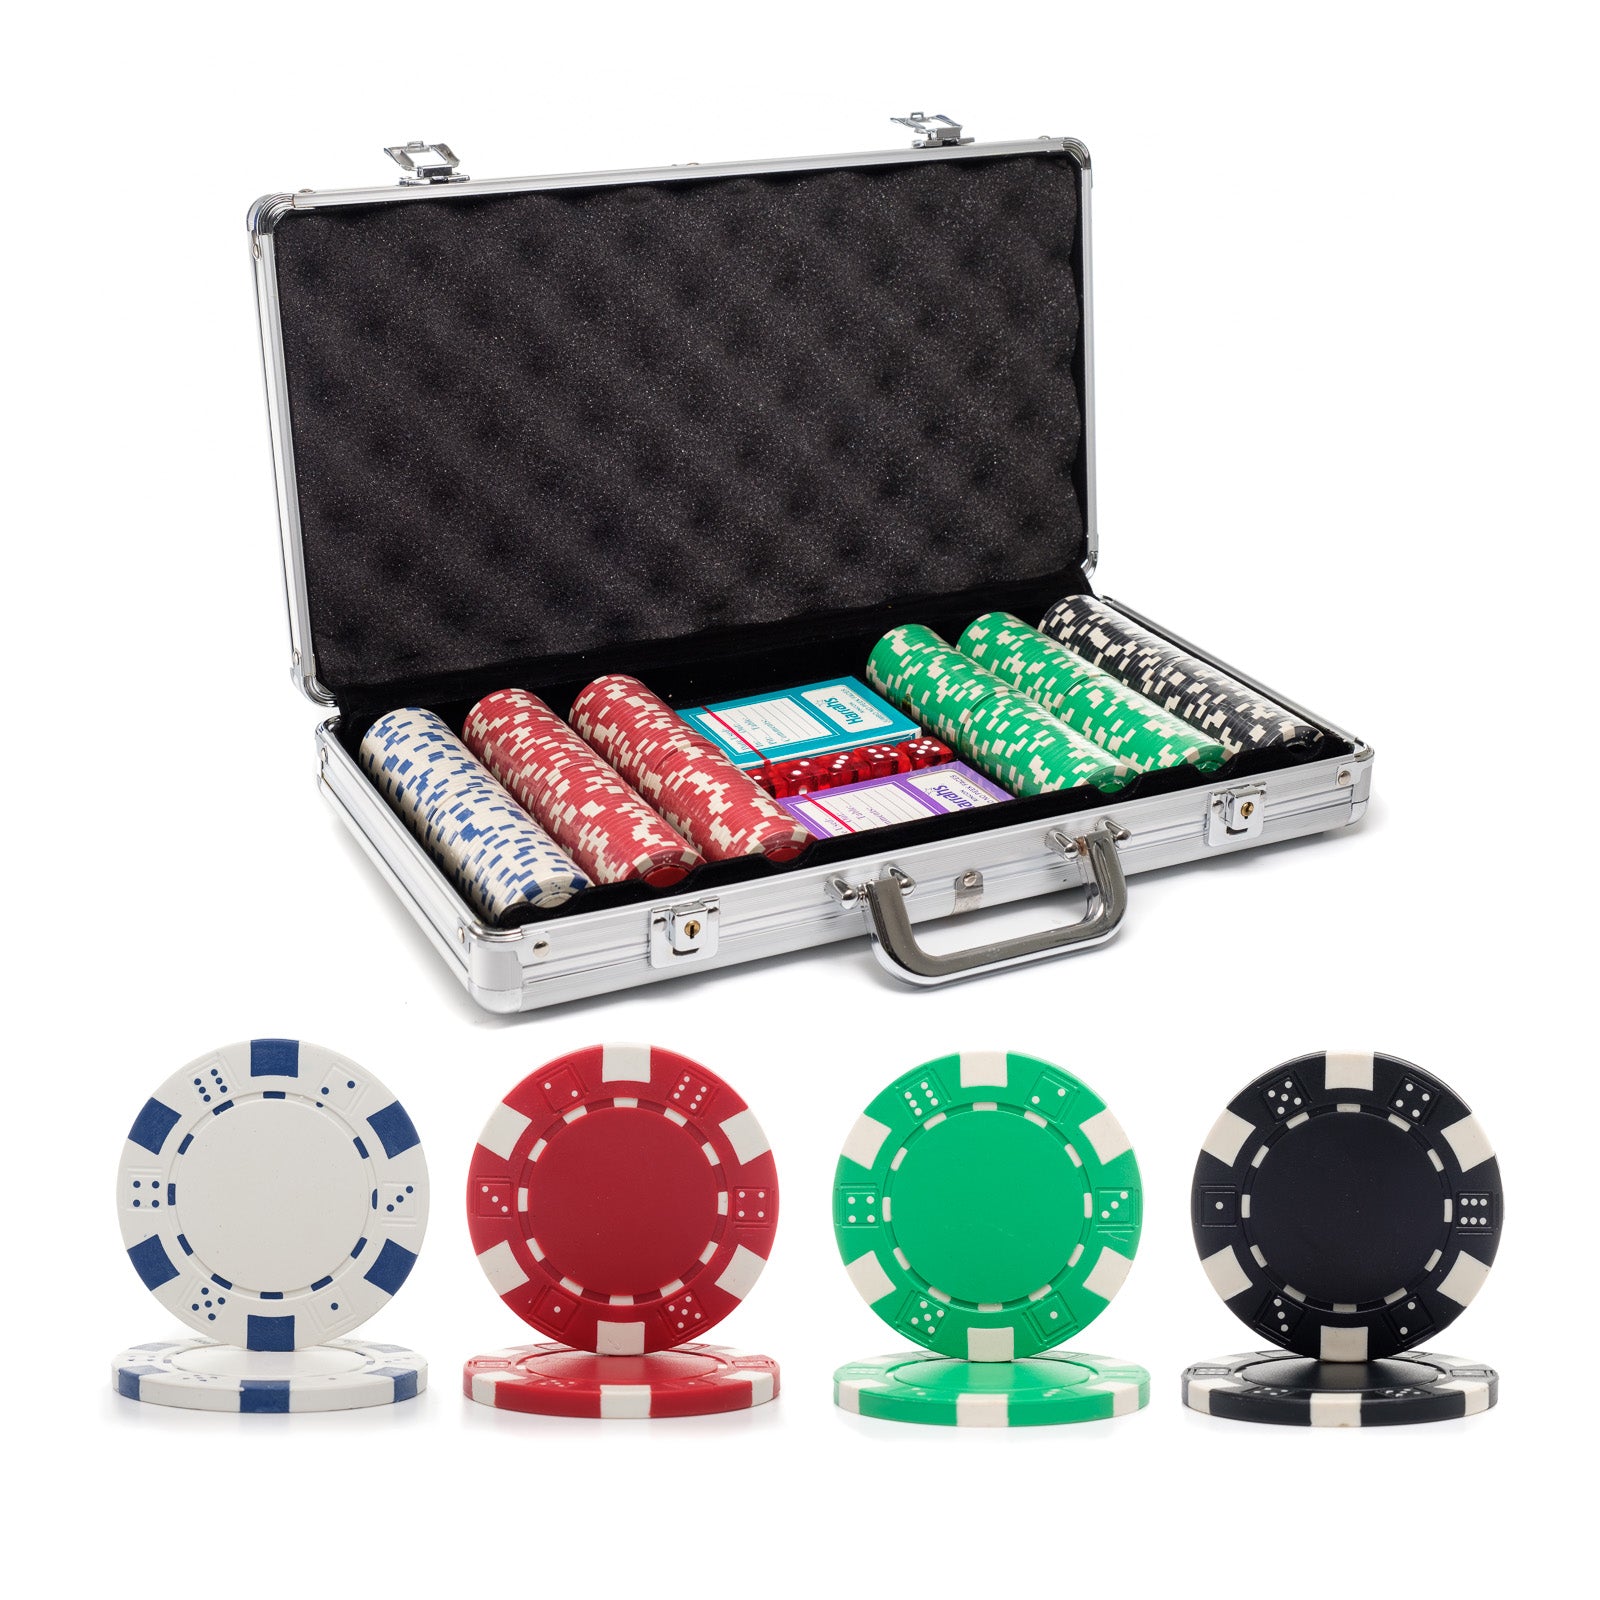 Hvem Flad scene 300 pc. 11.5g Dice Rim Poker Chip Set with Aluminum Case | Casino Supply